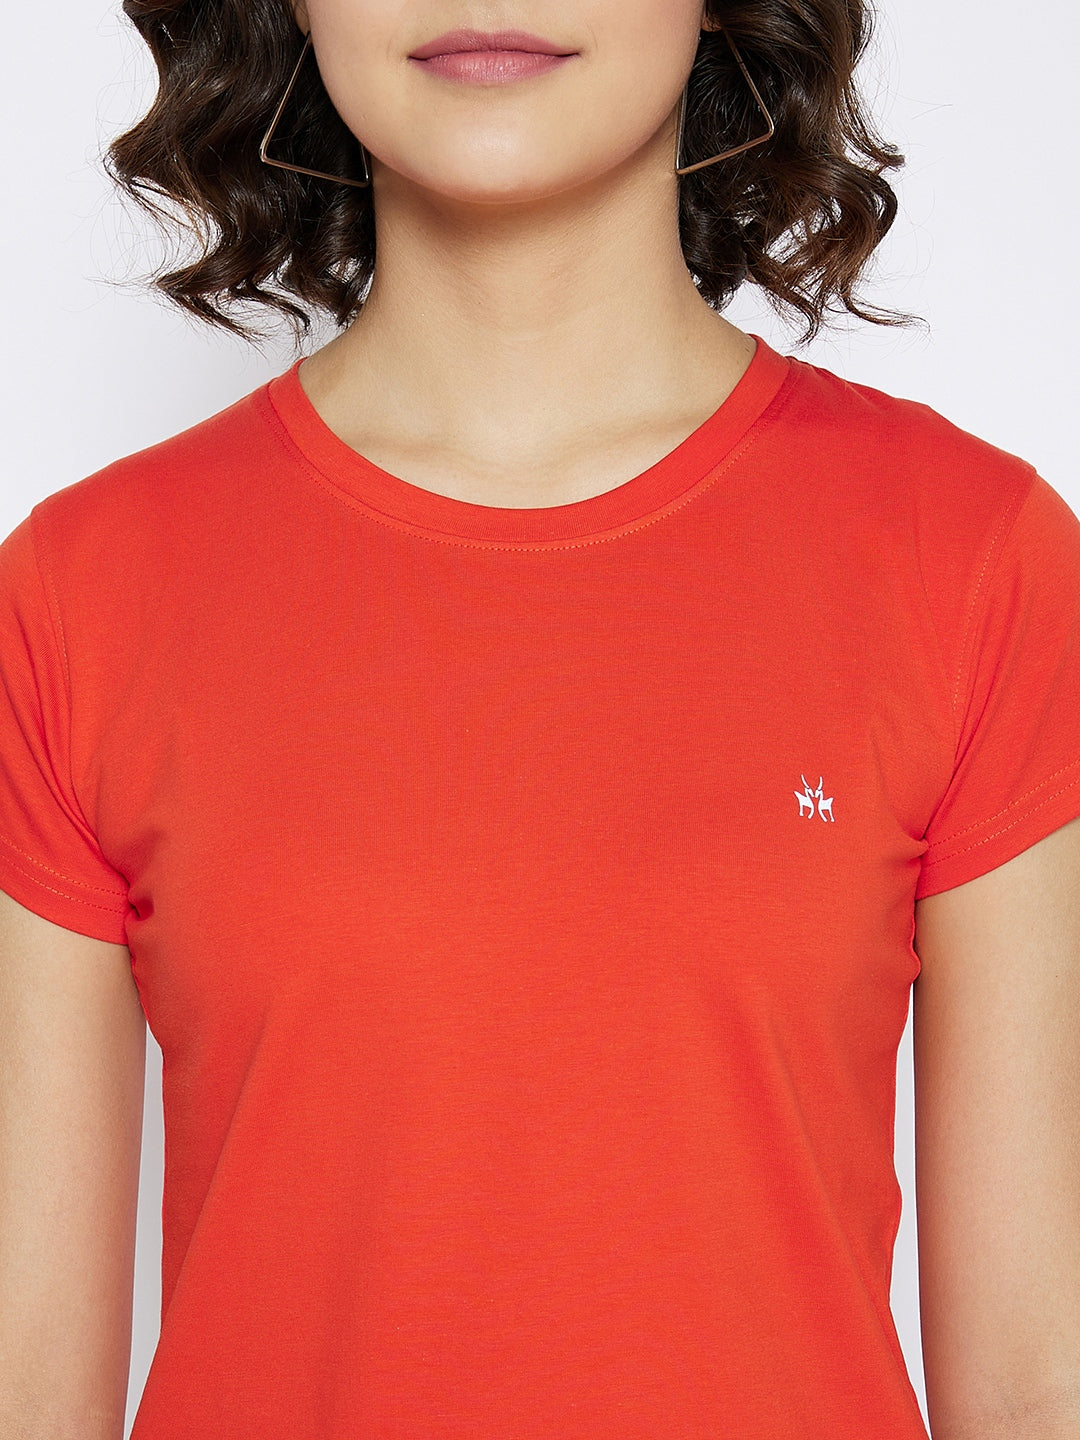 Orange Round Neck T-shirt - Women T-Shirts